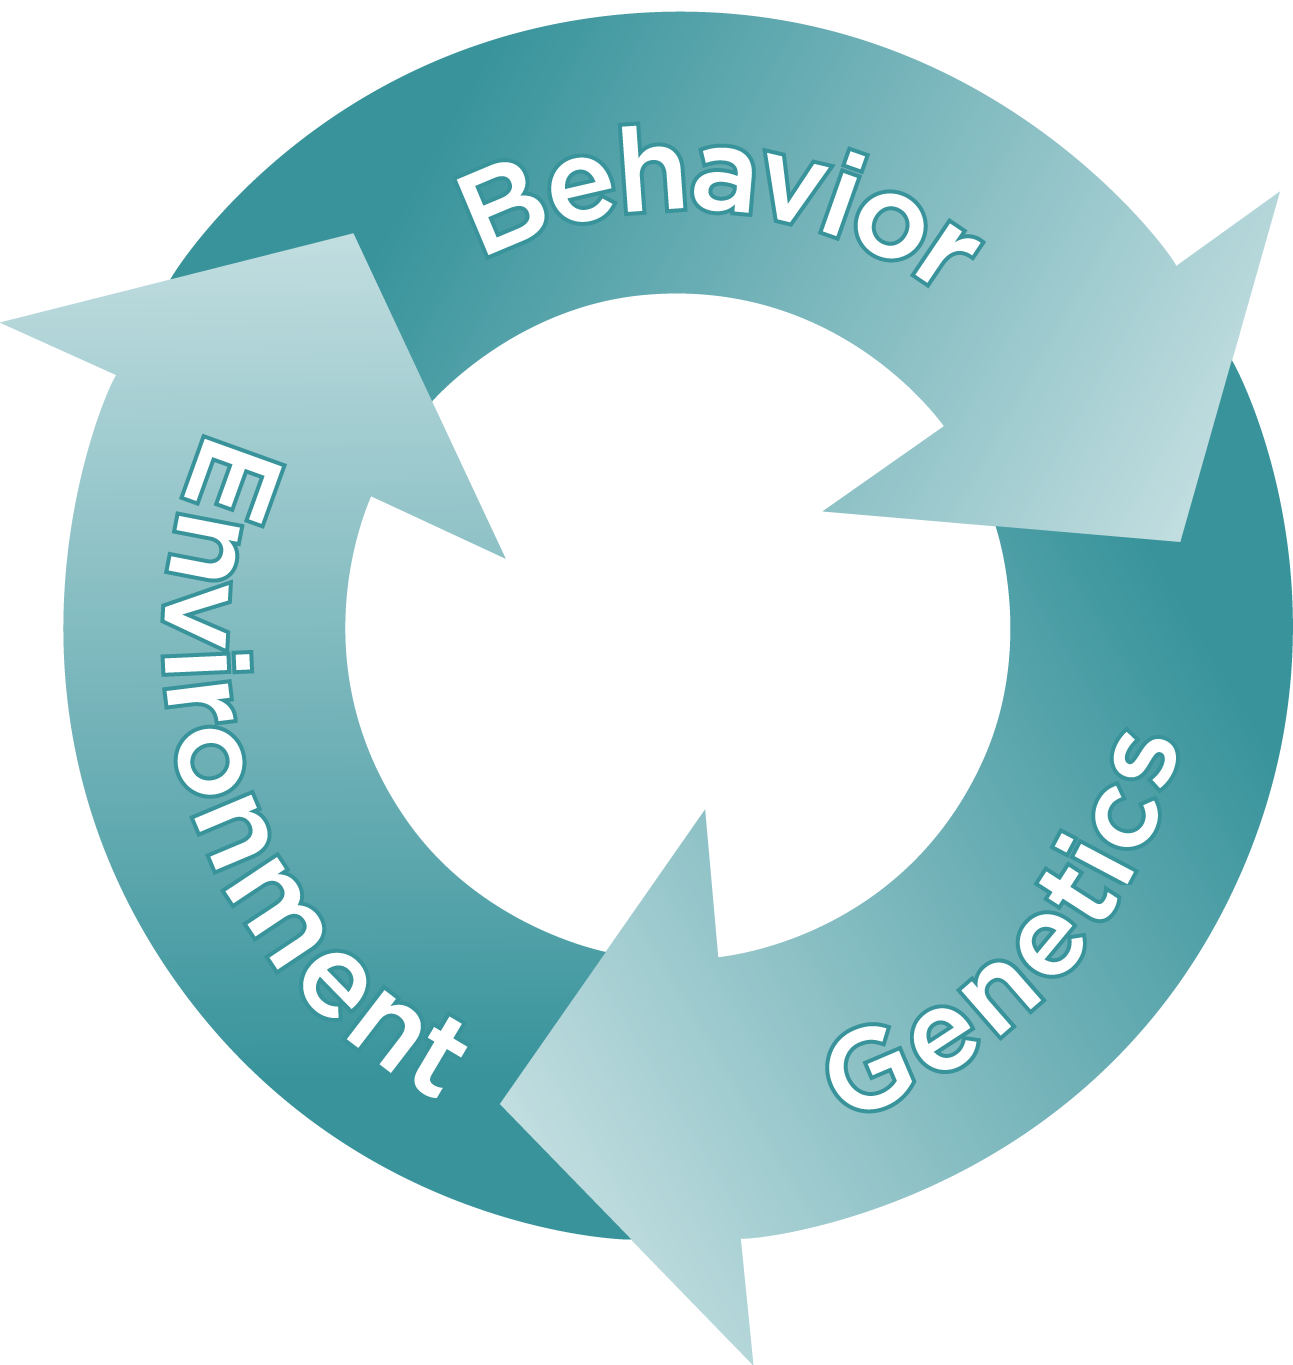 Is Behavior Based Upon Genetics or Environment?